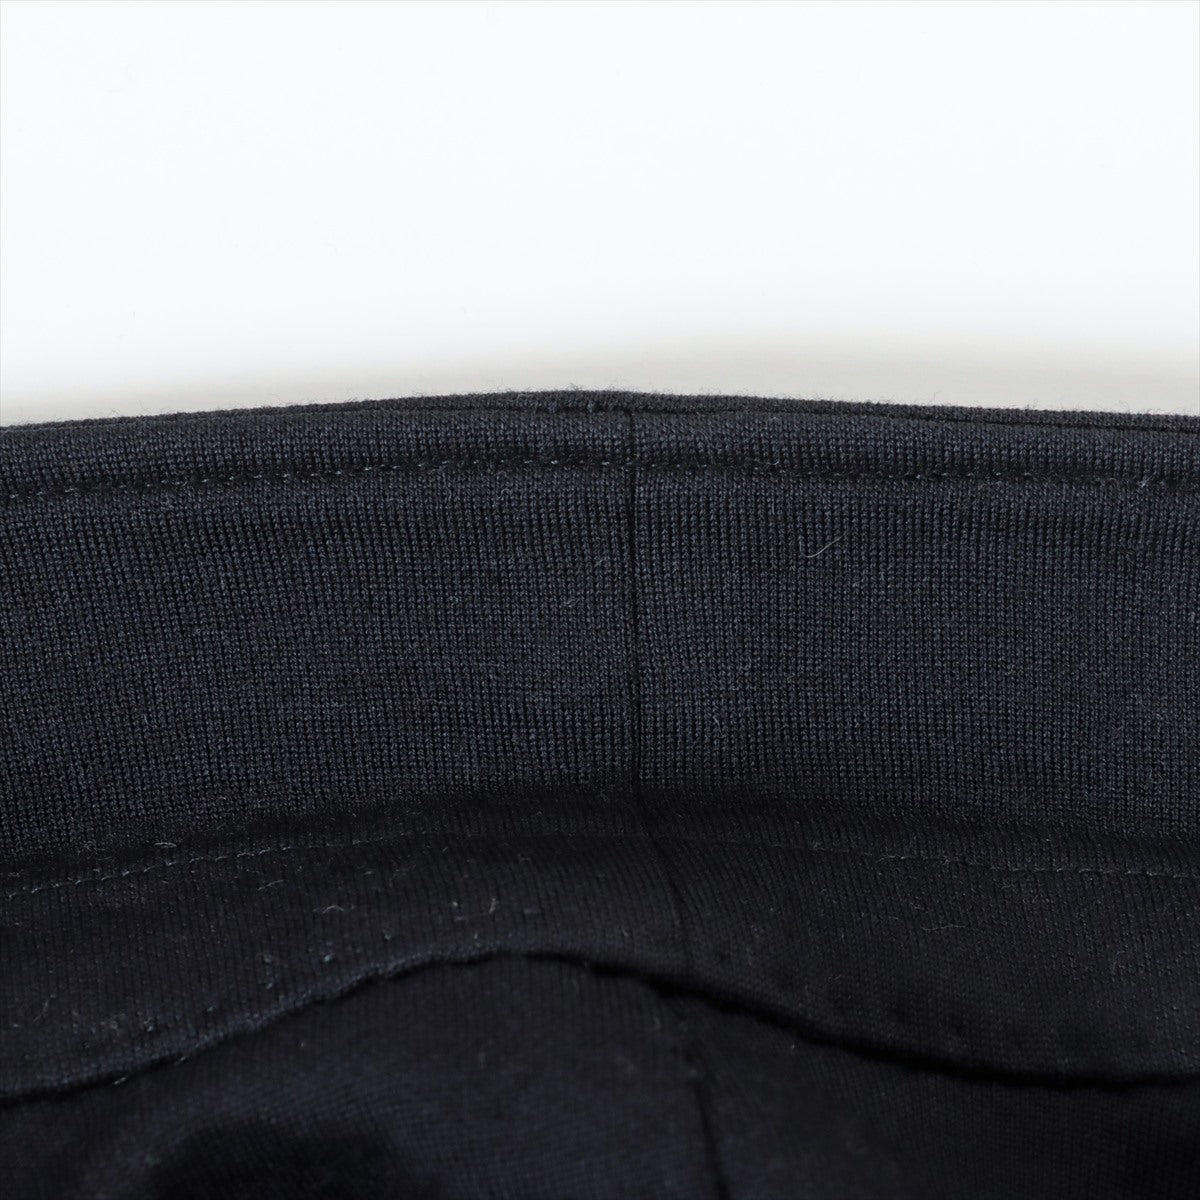 Calça Louis Vuitton Tecido Preto Masculino Original - KIQ219